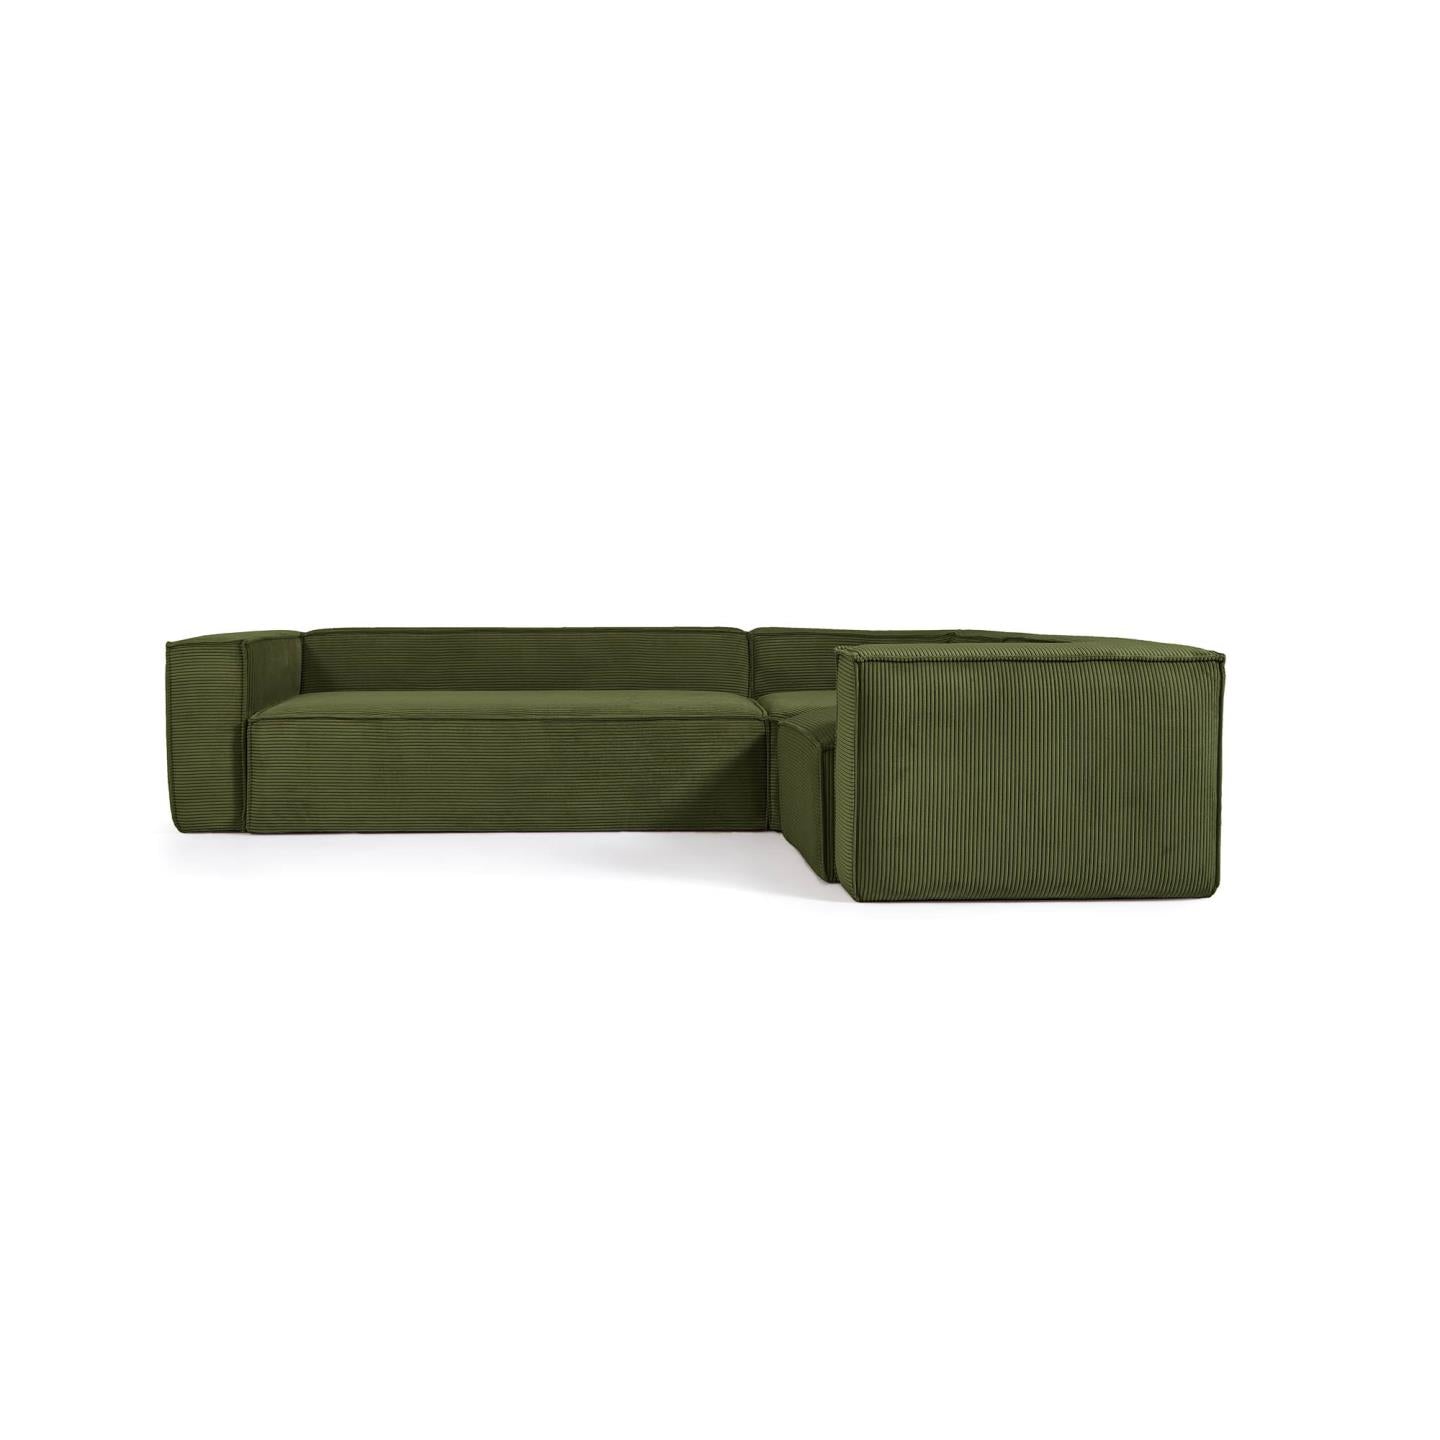 Blok 4 seater corner sofa in green corduroy, 320 x 230 cm / 230 x 320 cm